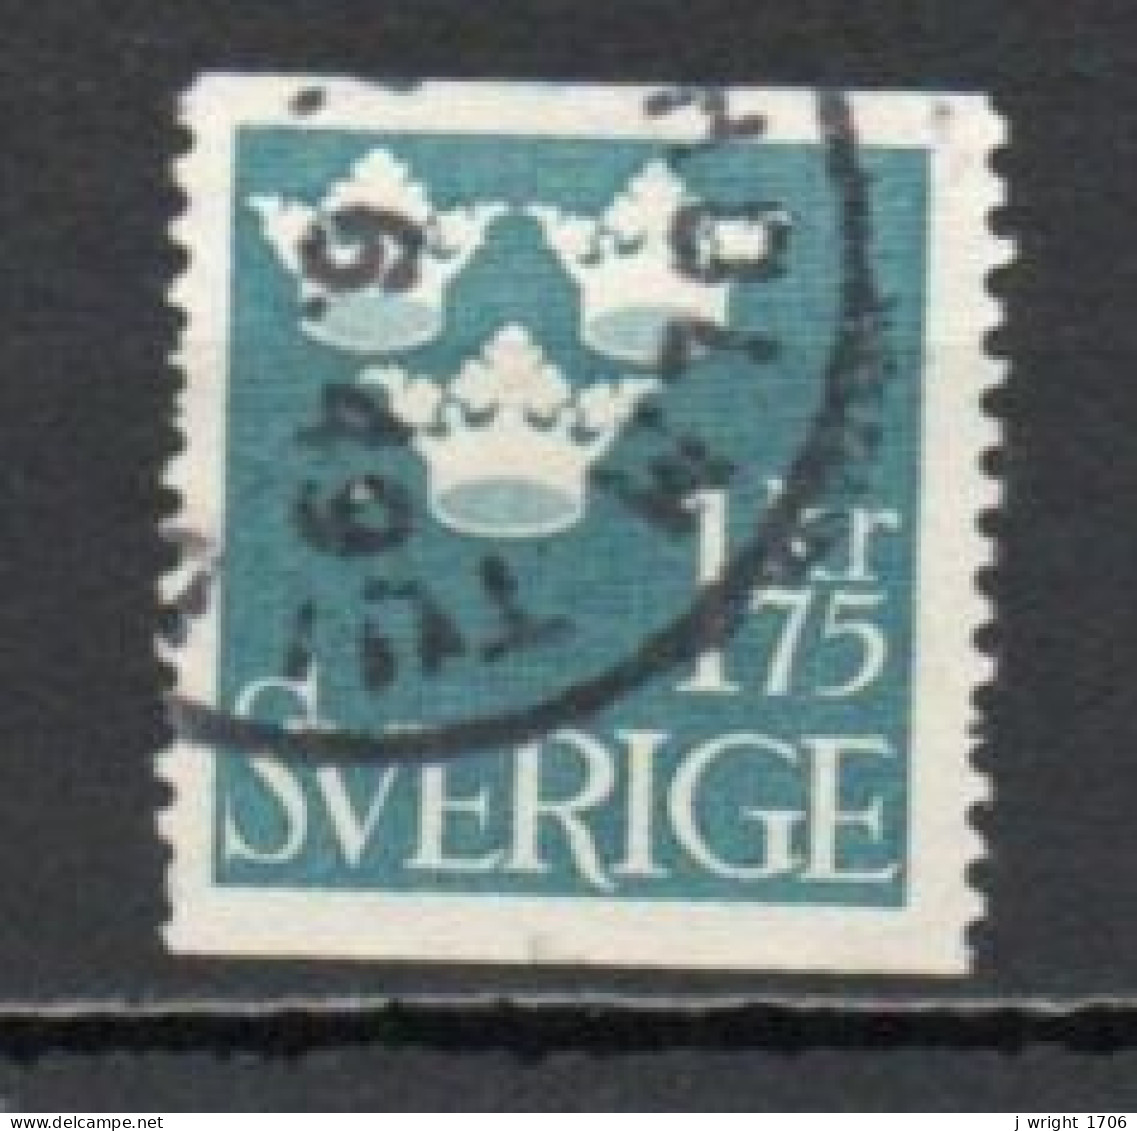 Sweden, 1948, Three Crowns, 1.75kr, USED - Oblitérés